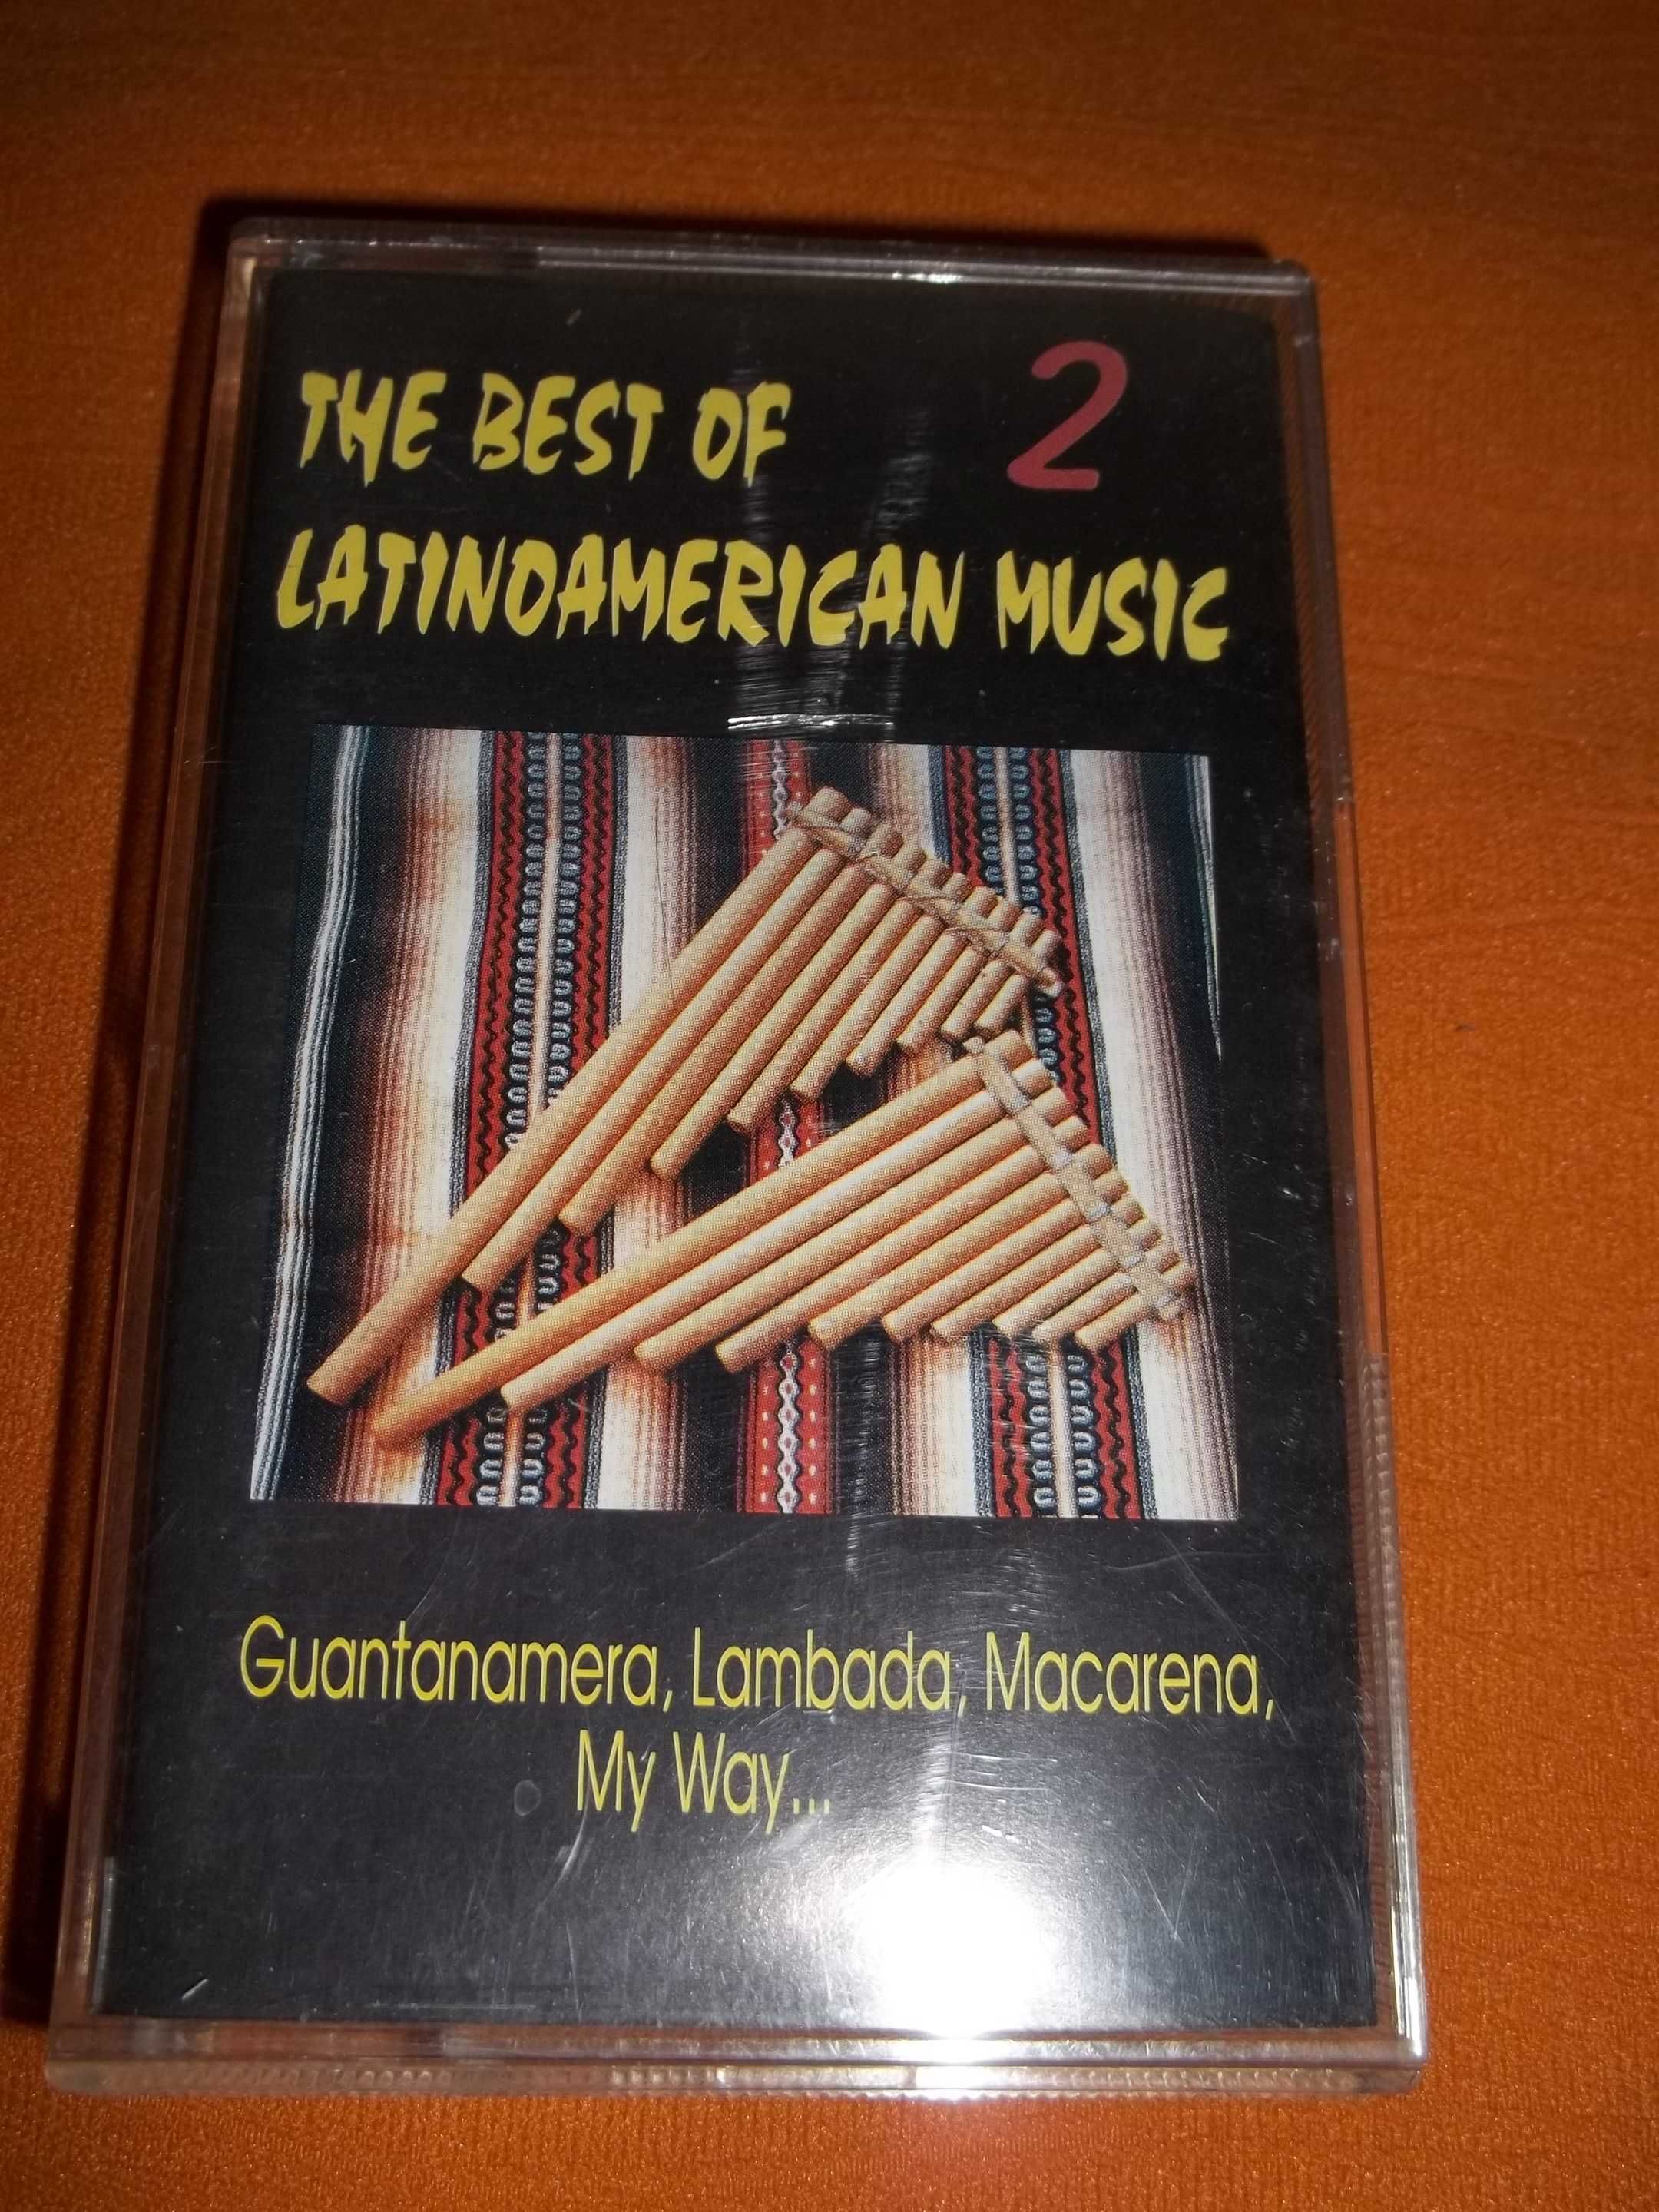 Muzyka latynoska - kaseta magnetofonowa.Guantanamera,Lambada,,Macarena